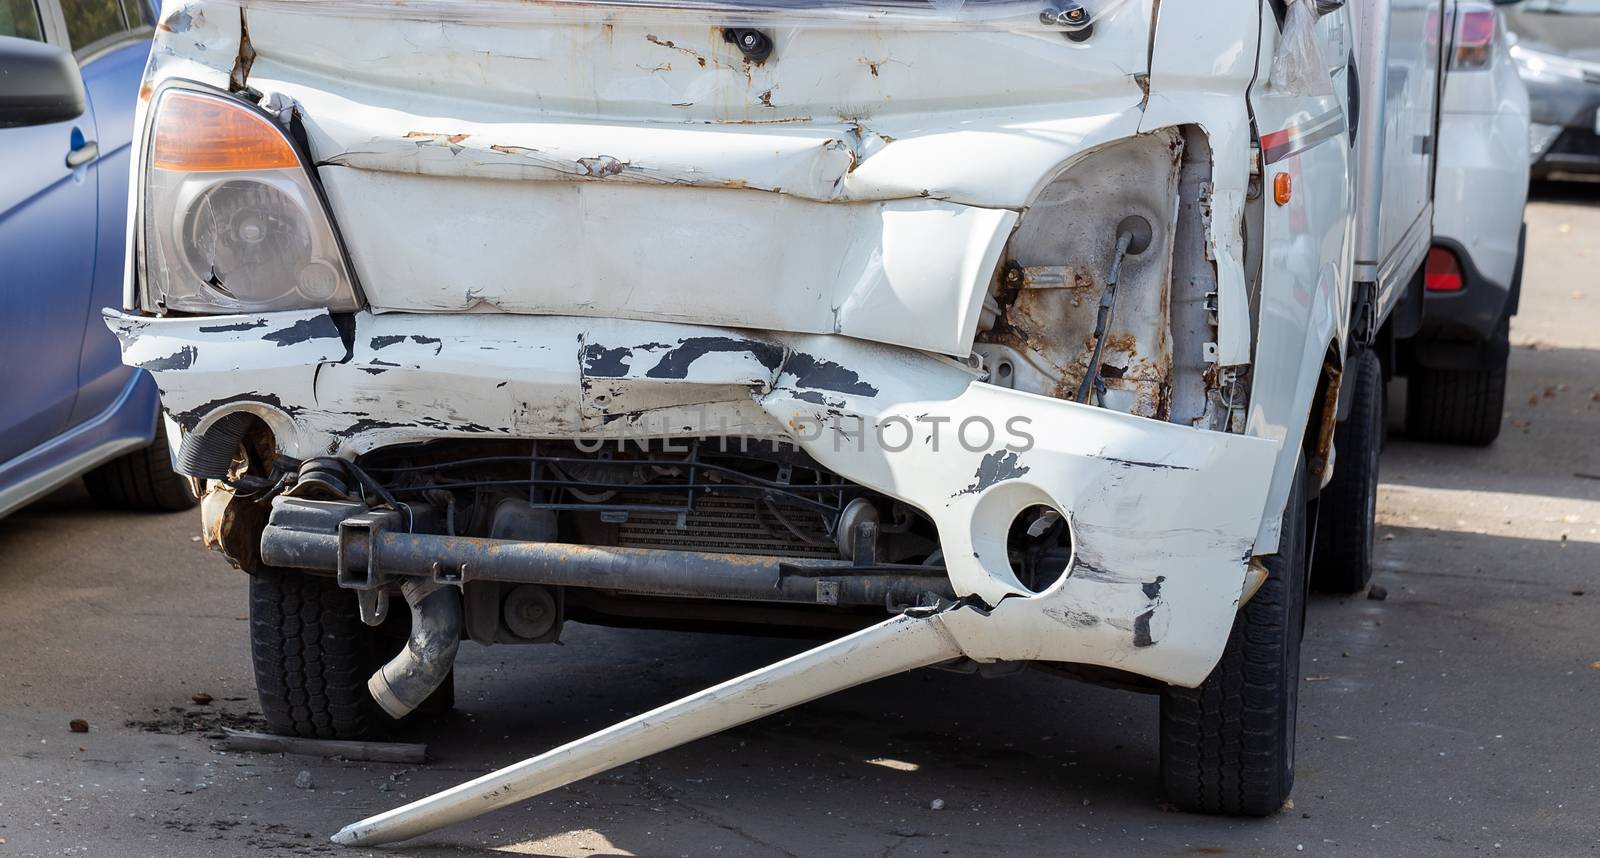 Crashed Car close-up. Insurance case. by bonilook